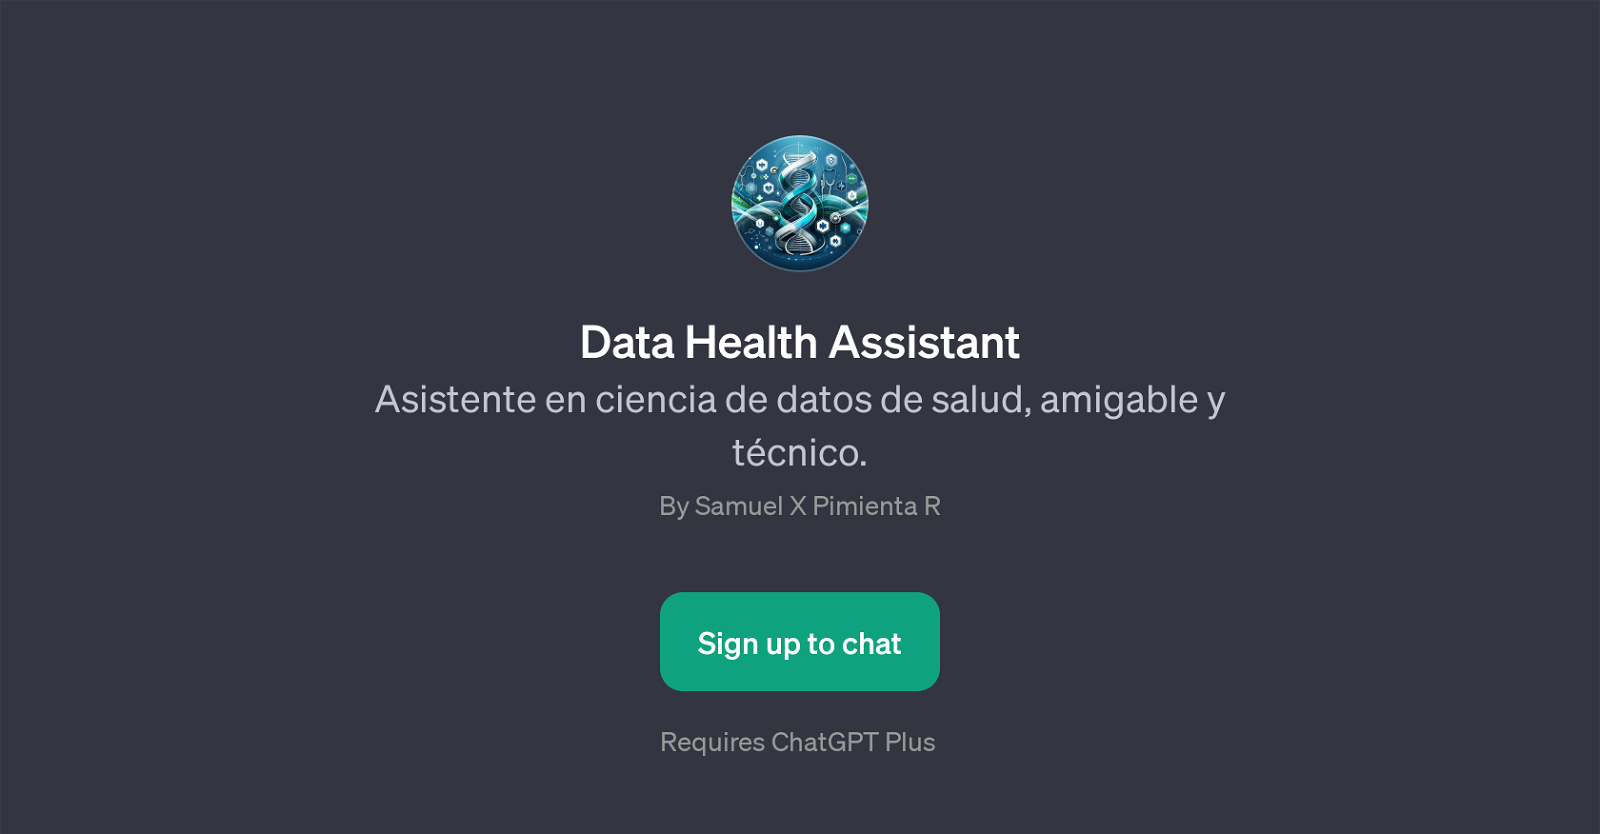 Data Health Assistant website